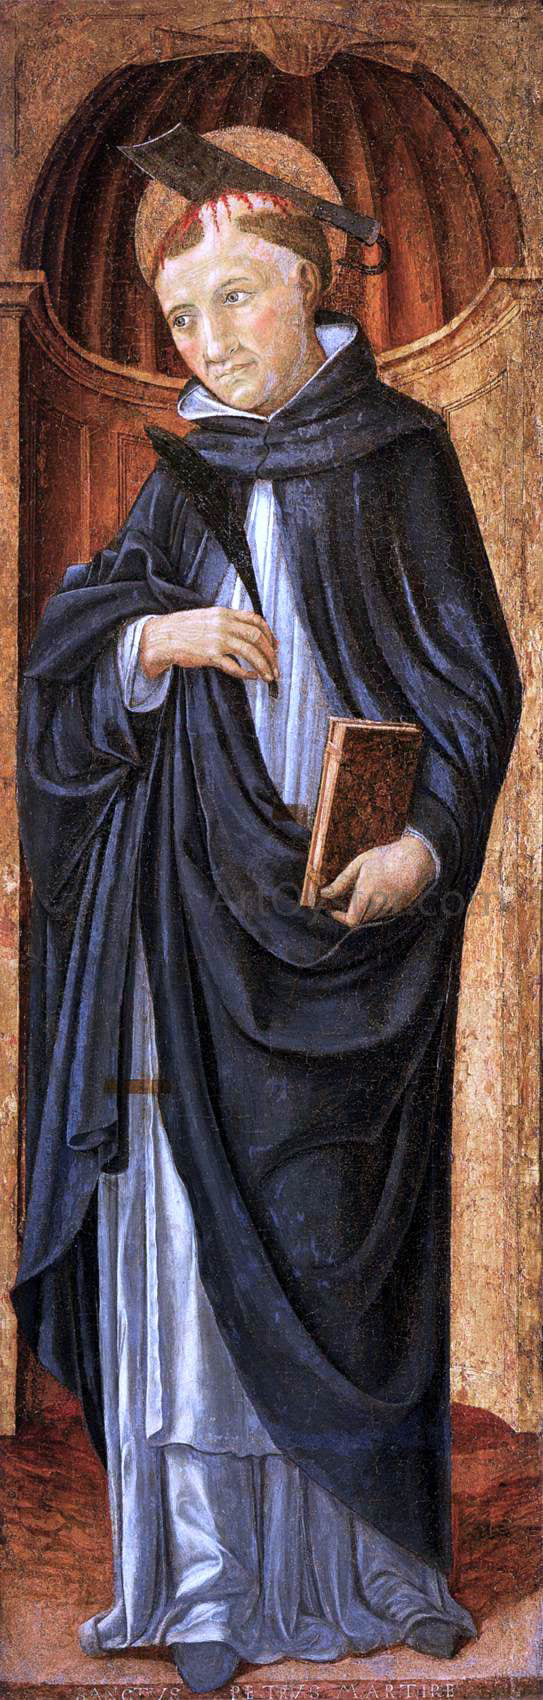  Vecchietta St Peter the Martyr - Canvas Art Print